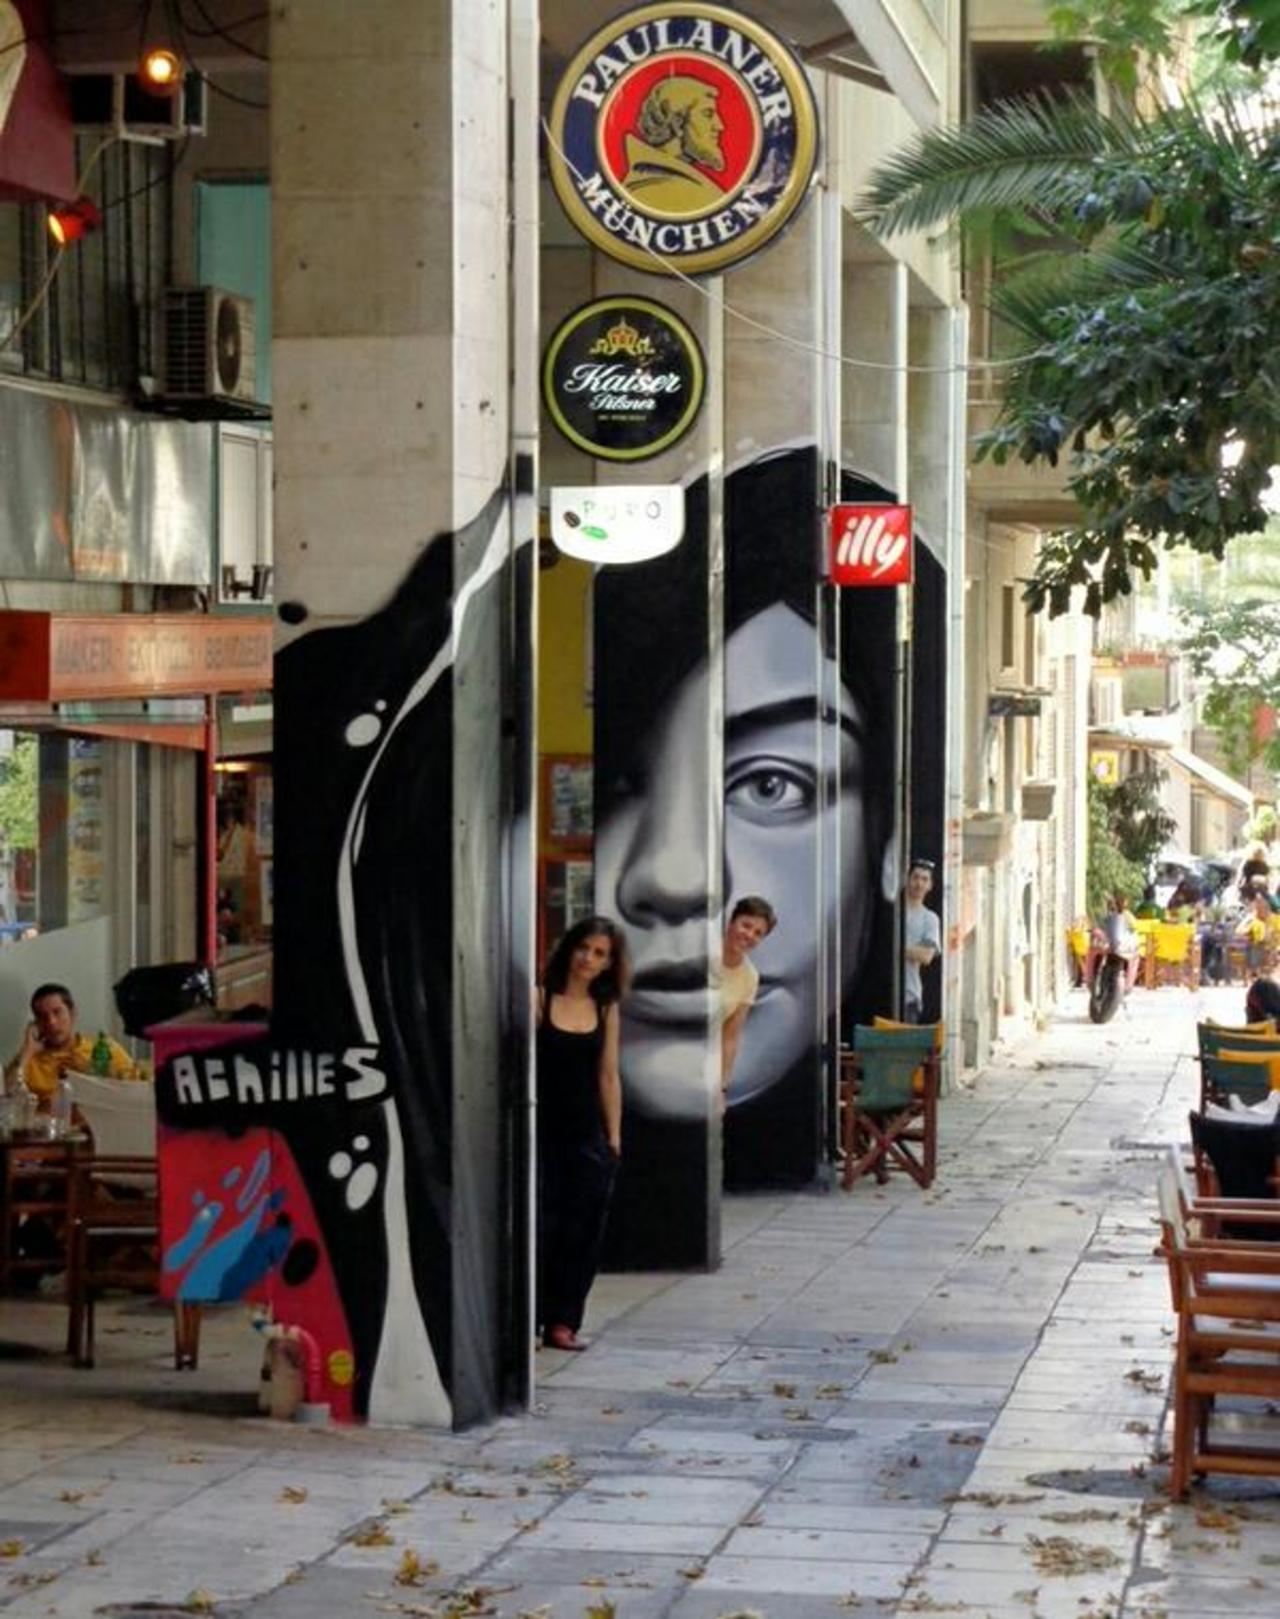 Las miradas. Anamorfosis 
Artista: Achilles
Atenas, Grecia.
#art #streetart #mural #graffiti http://t.co/WS3KEPmsG4